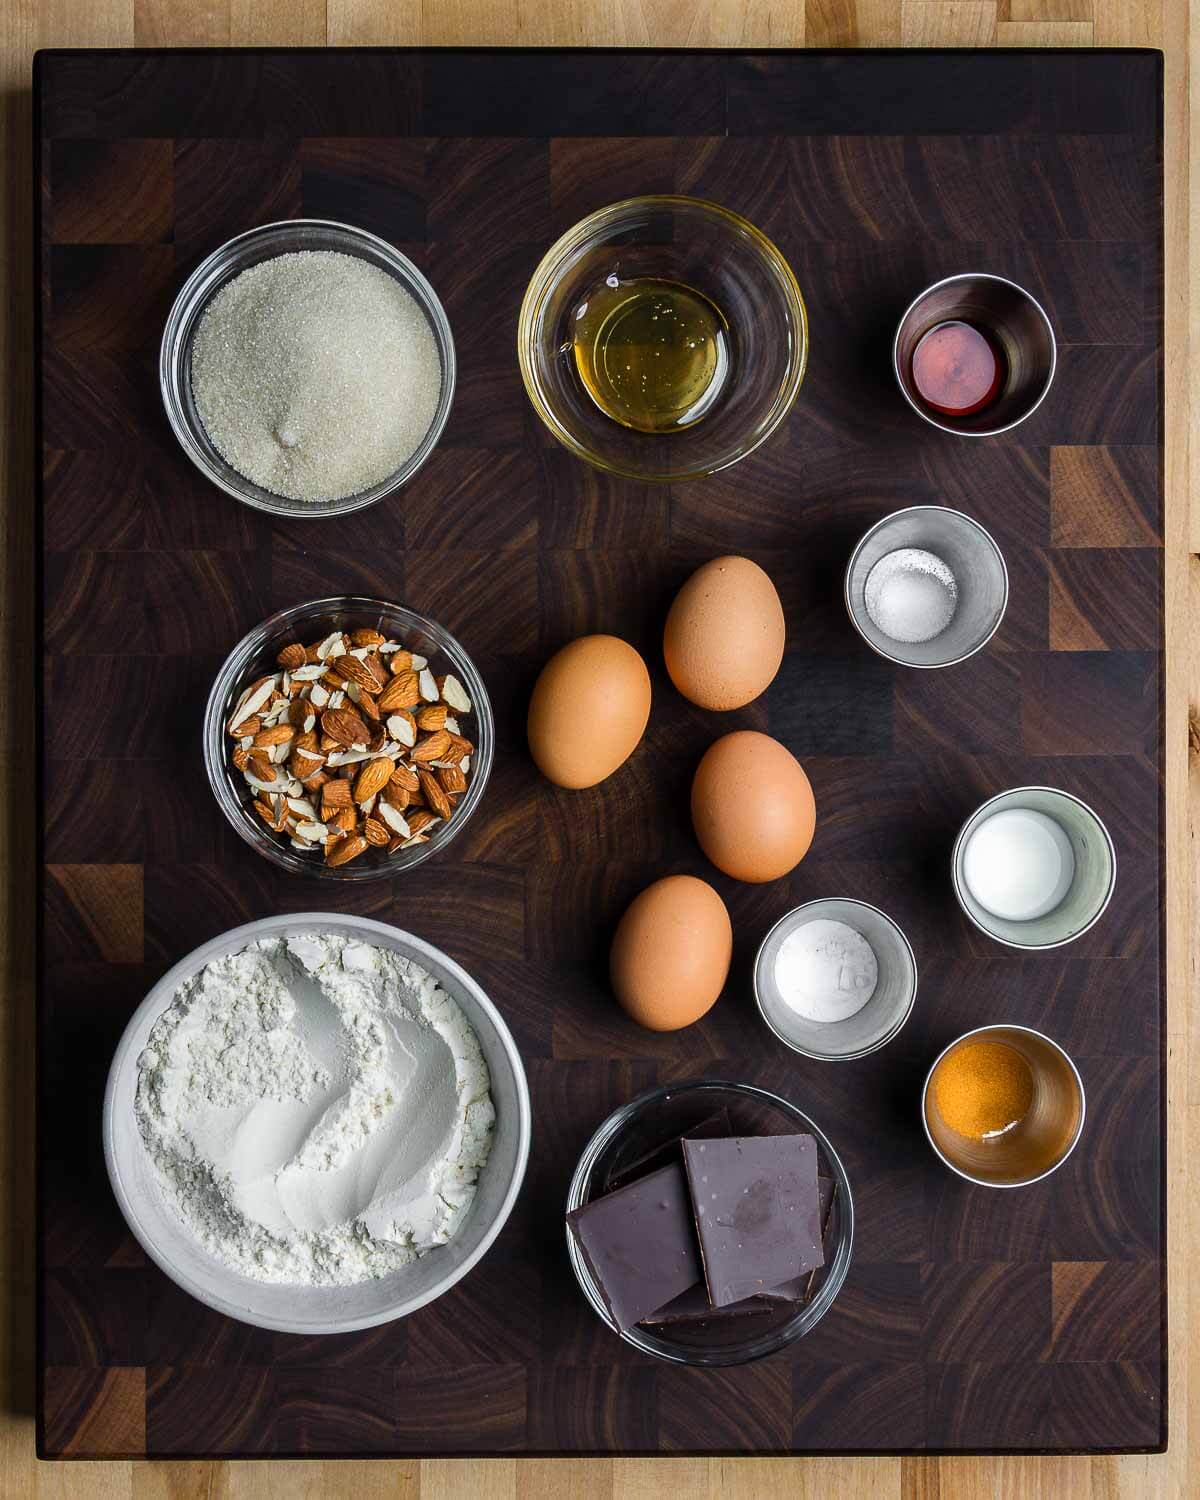 Ingredients shown: sugar, honey, vanilla extract, salt, almonds, eggs, milk, baking powder, cinnamon, flour, and chocolate.